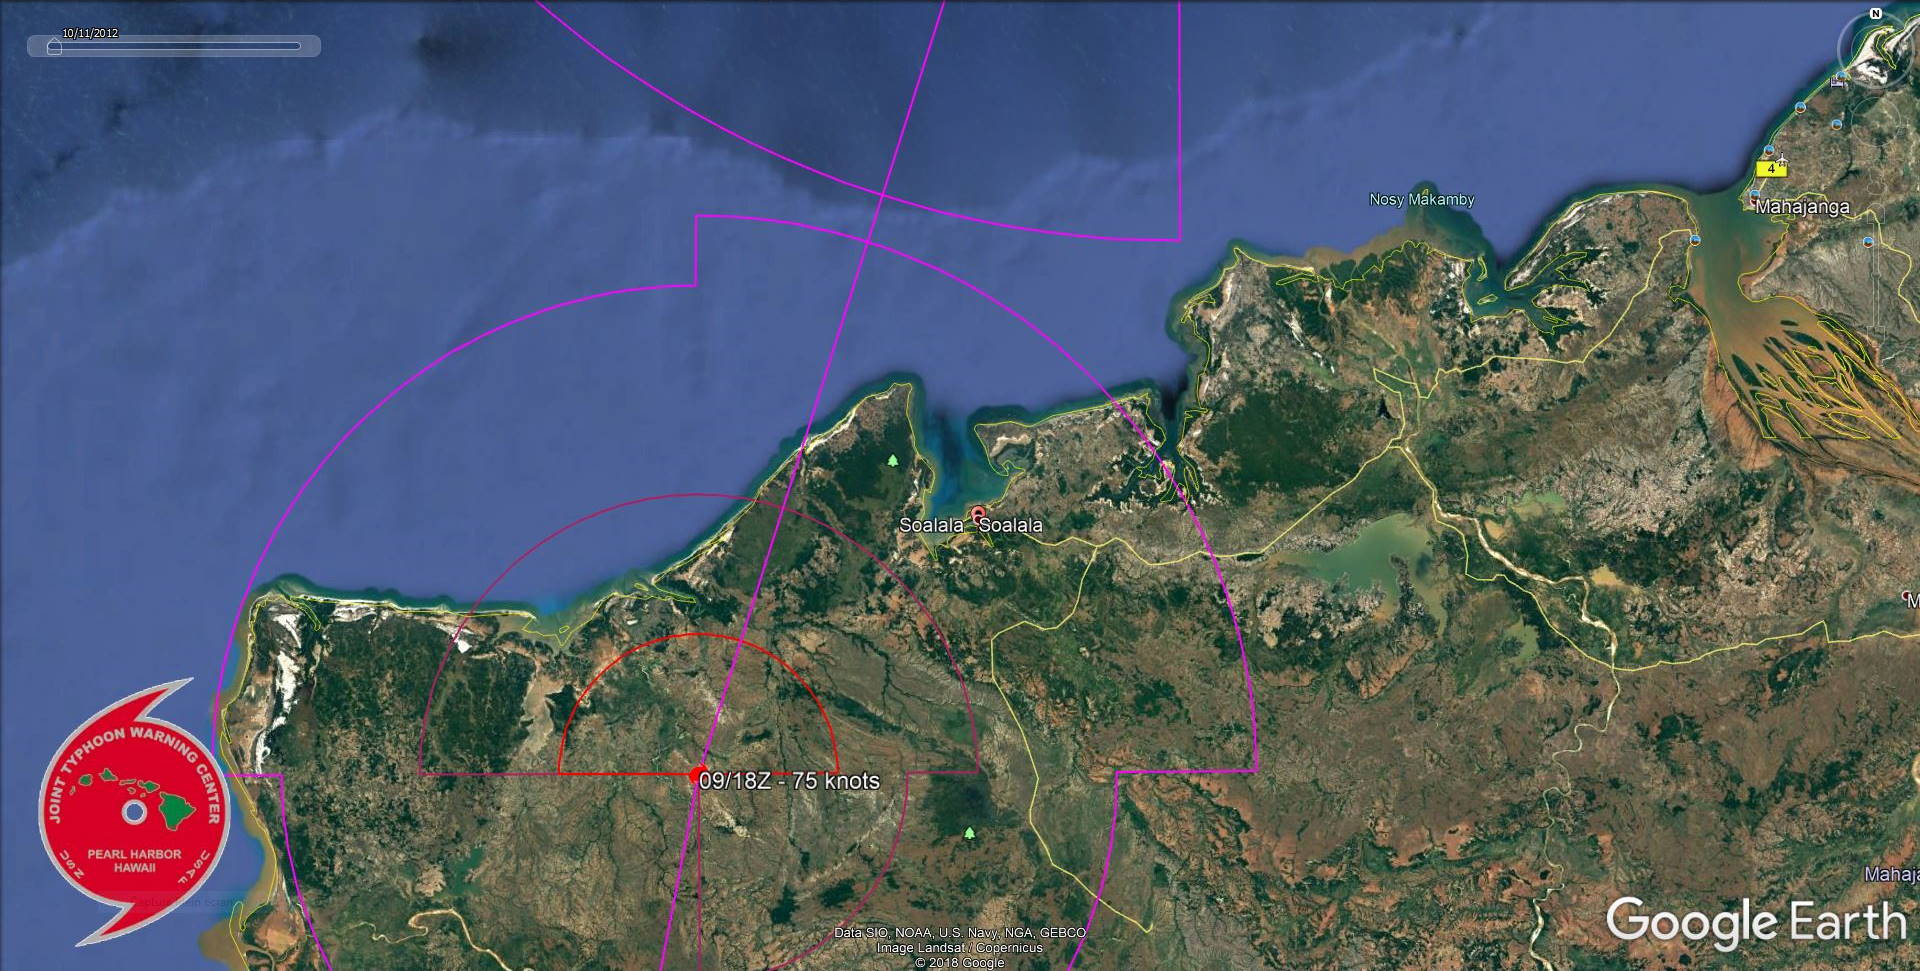 TC 02S(BELNA) making landfall near Soalala/Madagascar within 12h as a Cat1/2